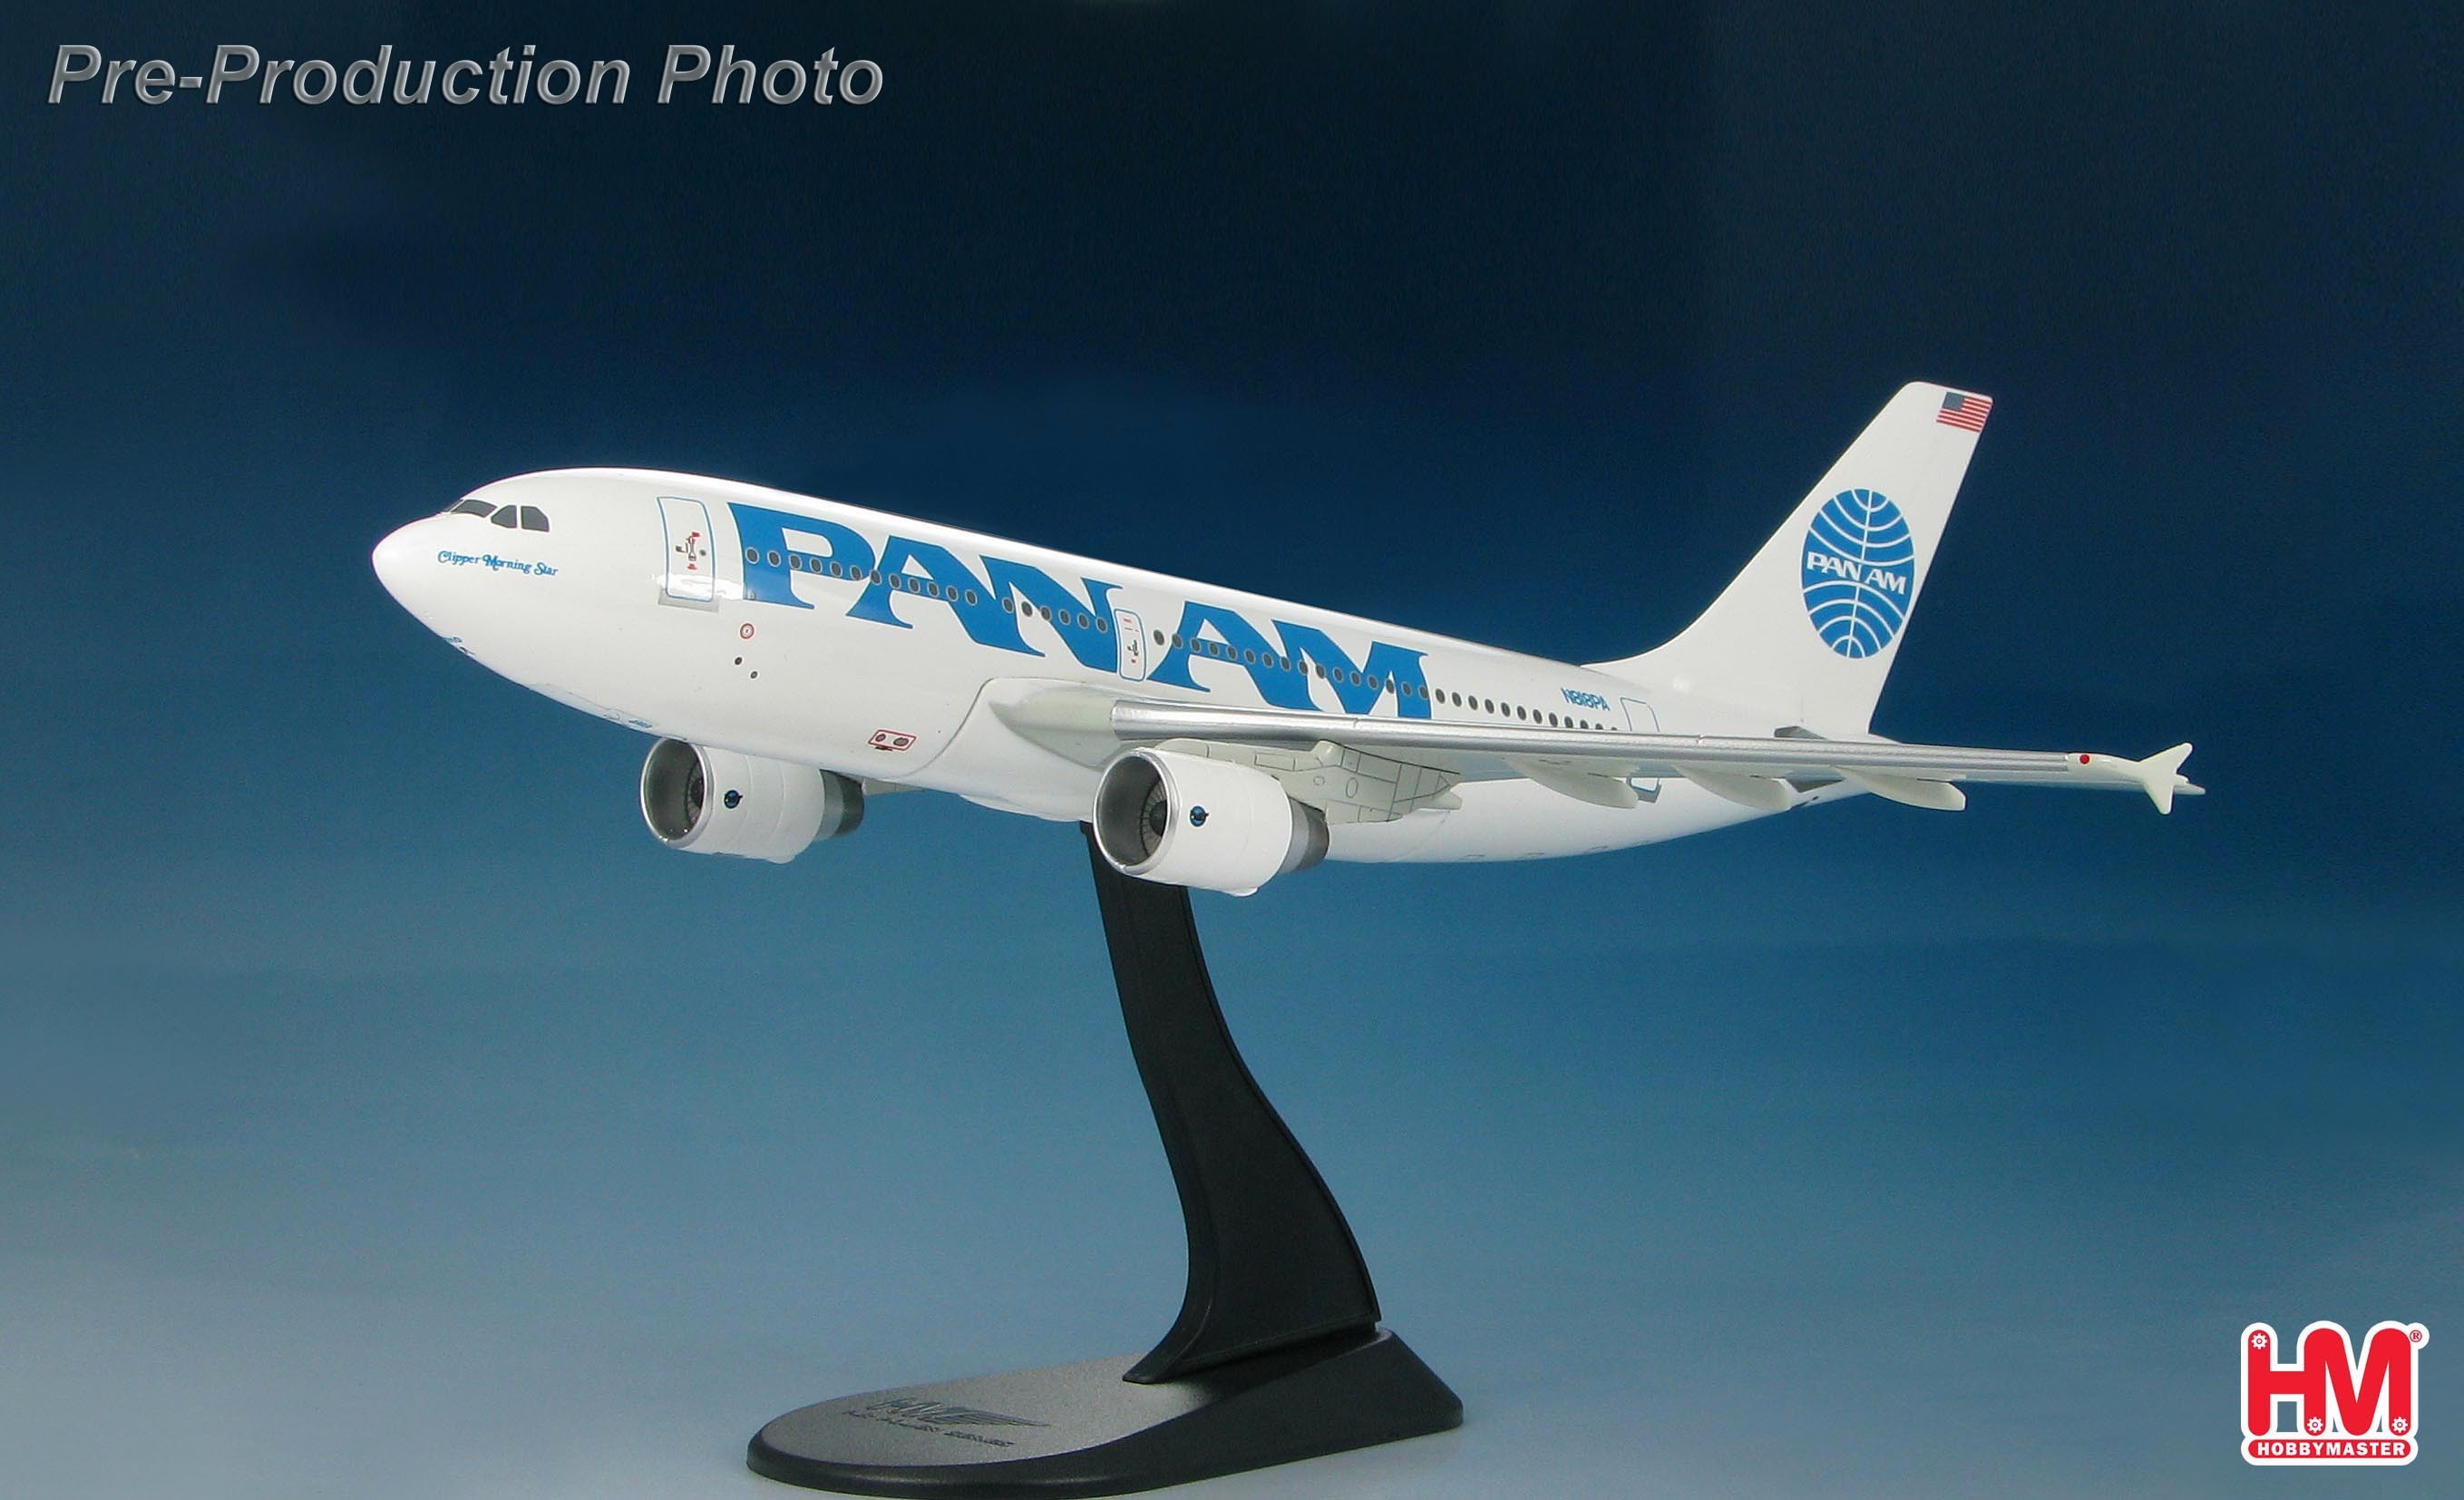 PAN AM パンアメリカン航空 パンナム エアバス A310 1/200 - yanbunh.com